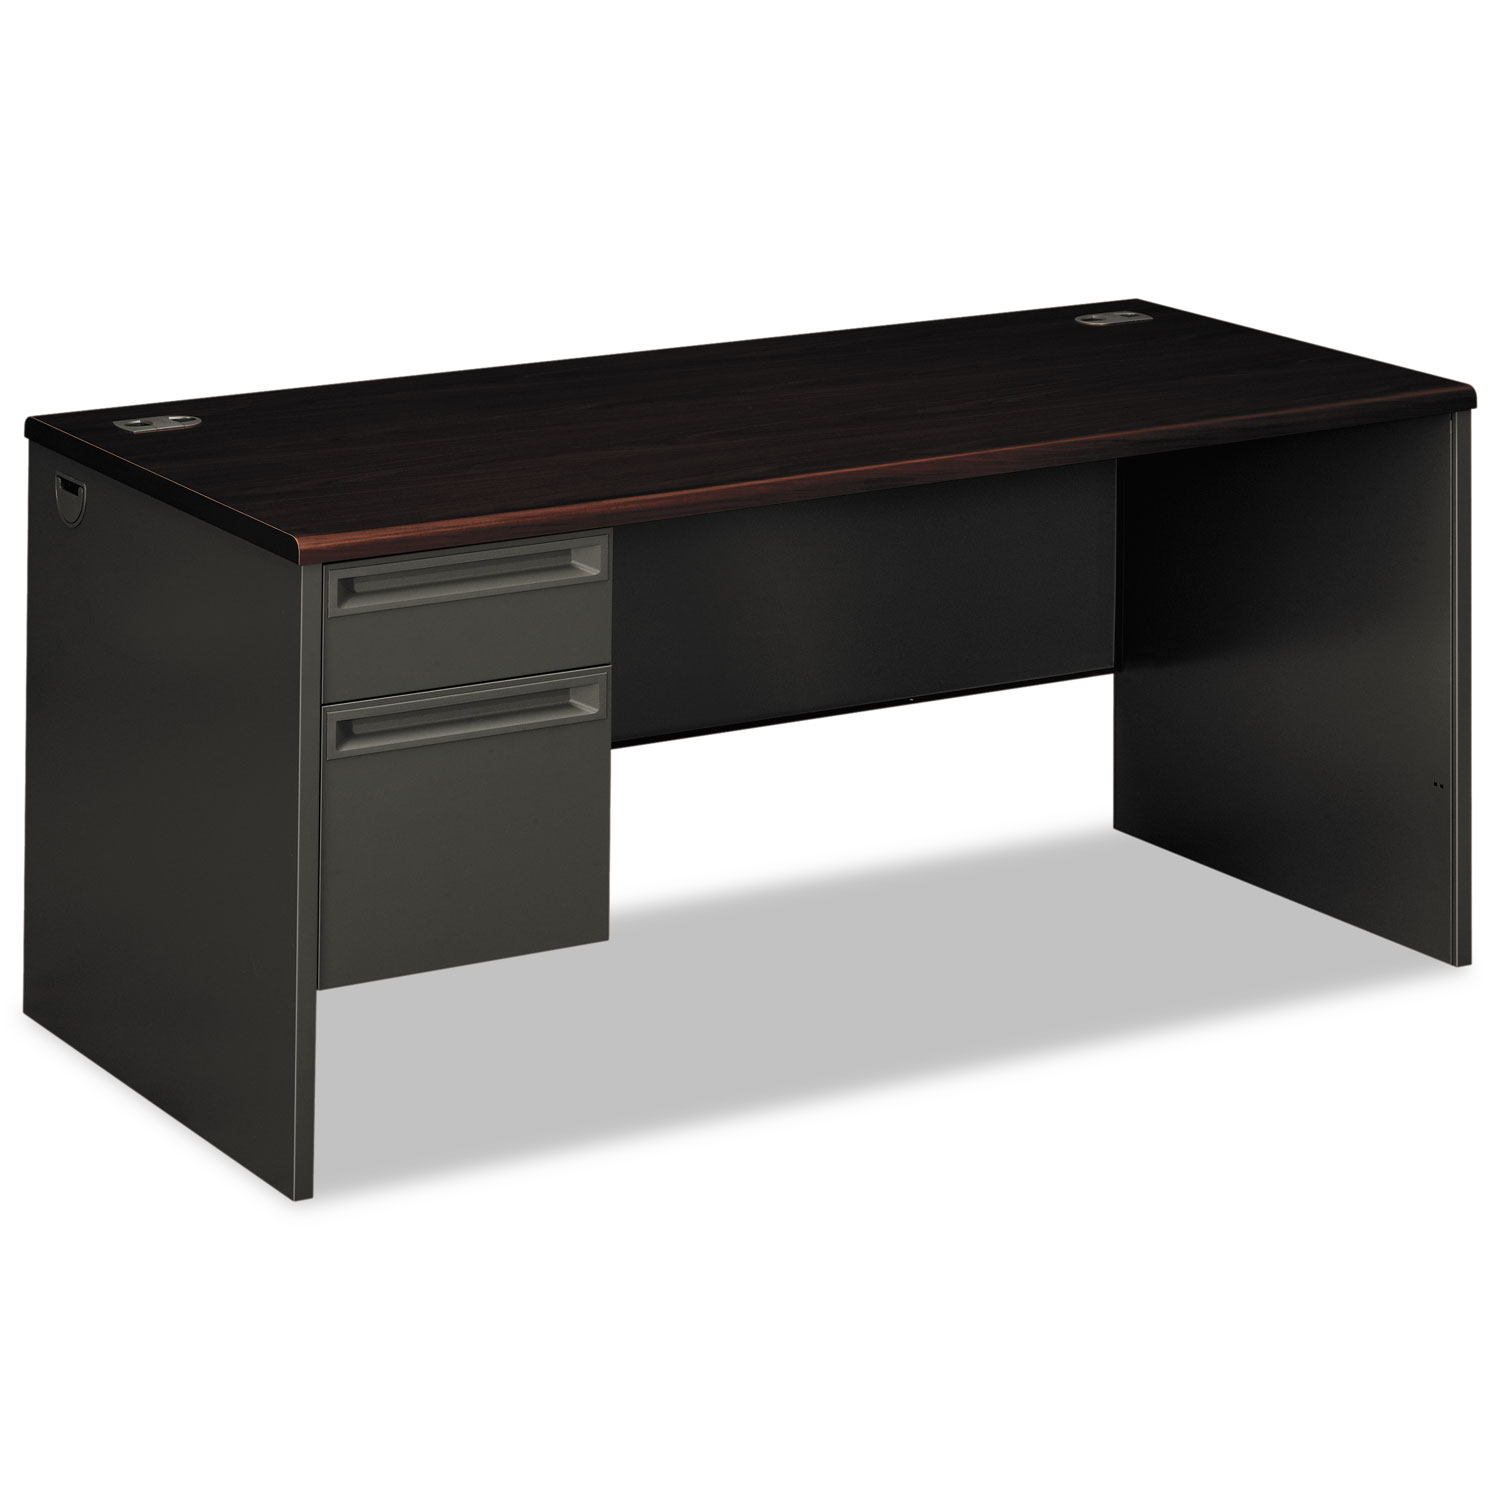  HON H38292L.N.S 38000 Series Left Pedestal Desk, 66w x 30d x 29.5h, Mahogany/Charcoal (HON38292LNS) 